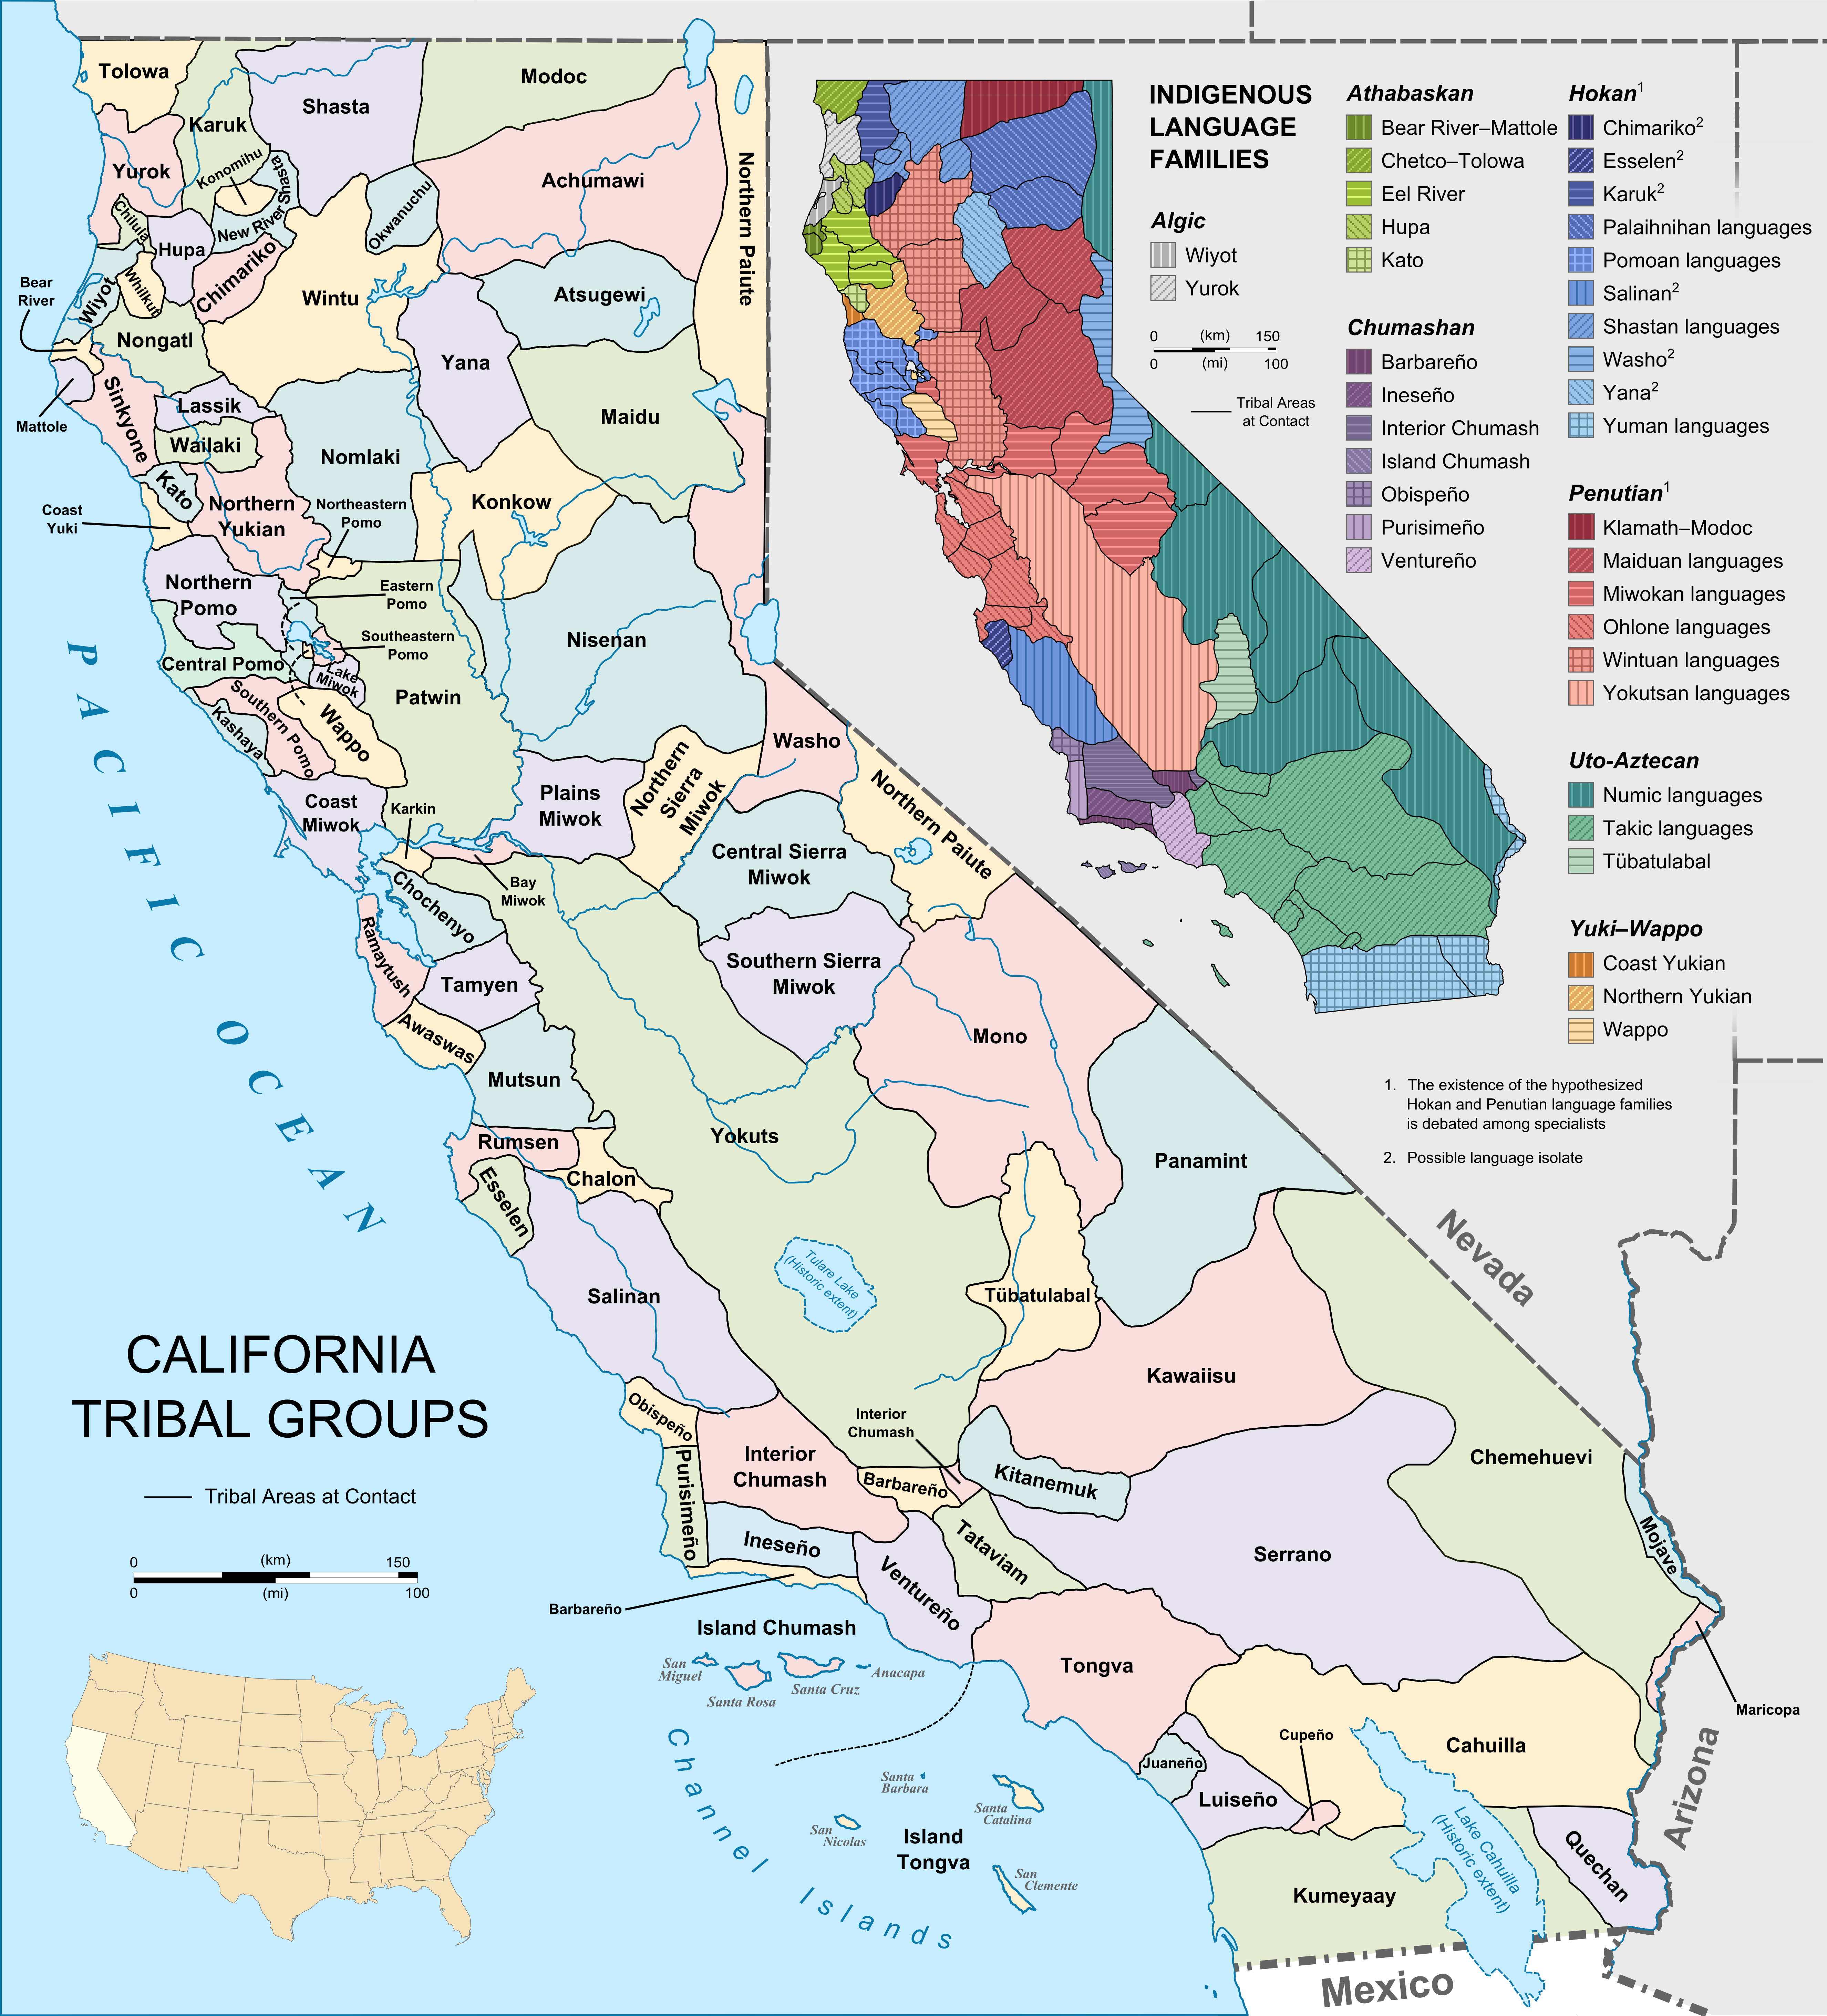 Indigenous Peoples of California